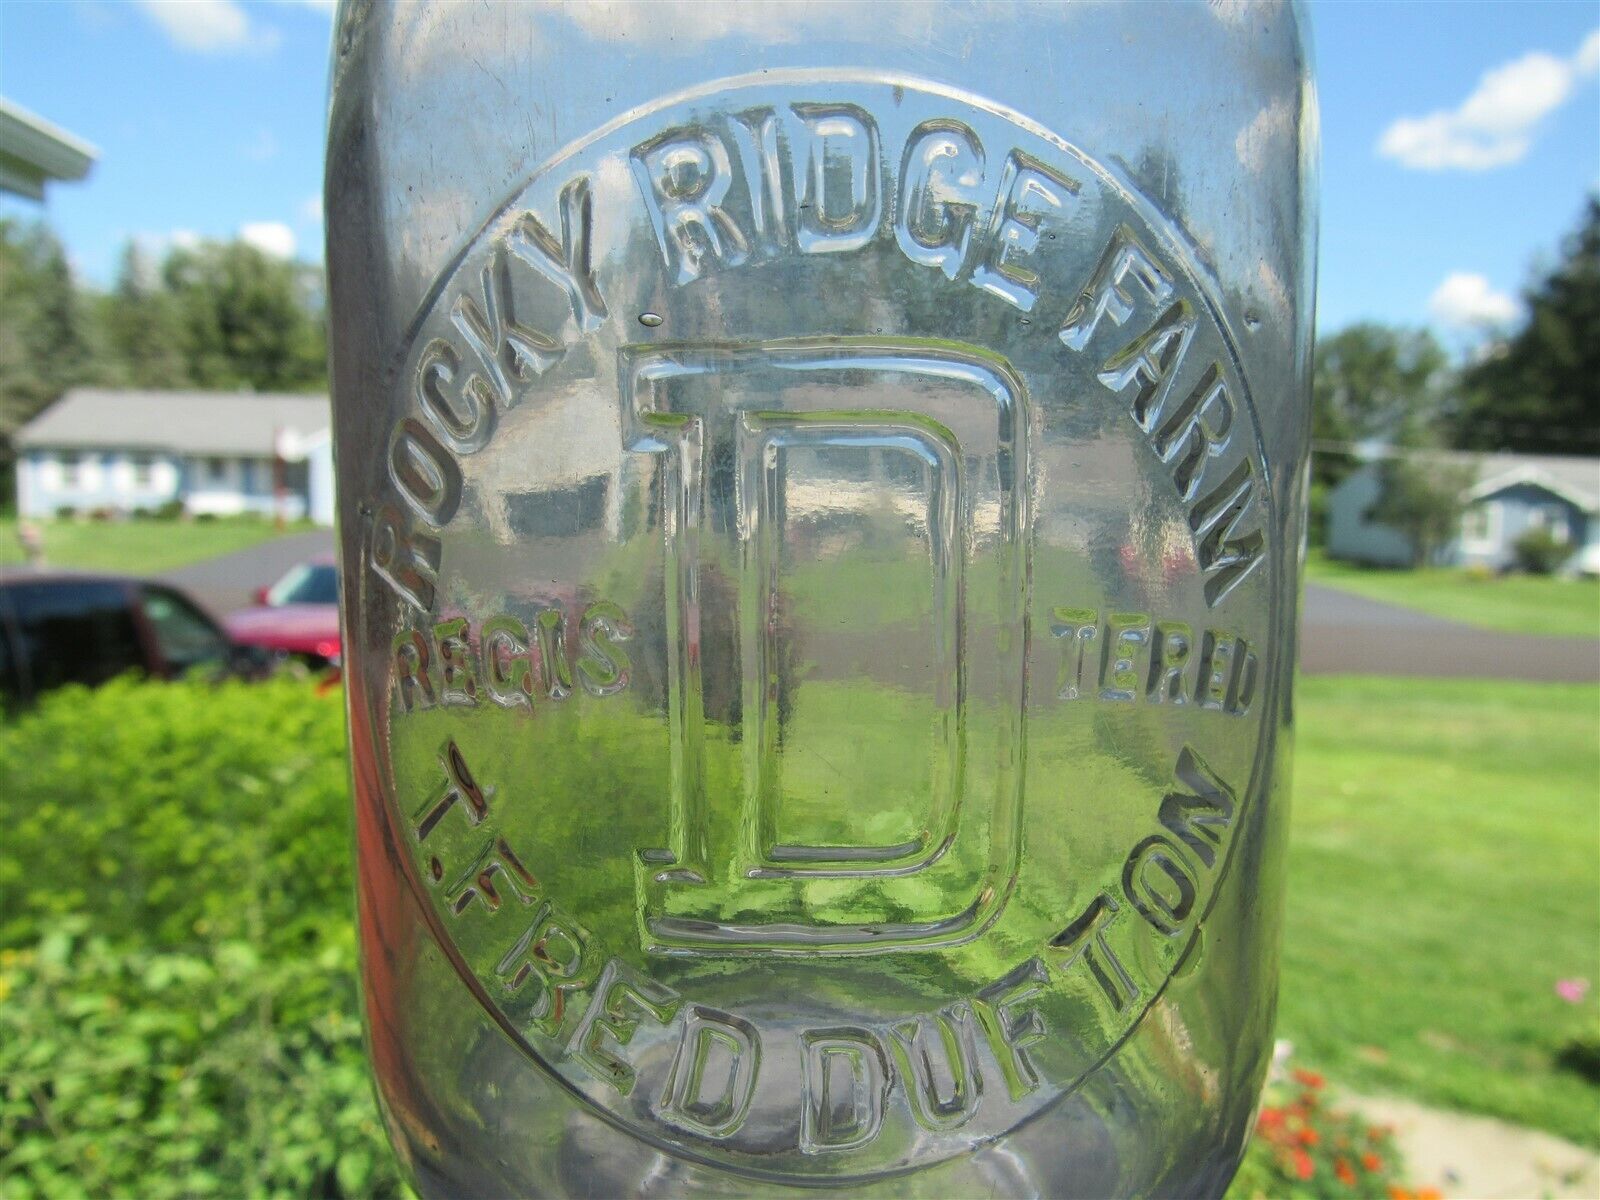 TREQ Milk Bottle Rocky Ridge Farm T Fred Dufton Andover Millbury MA Location ???